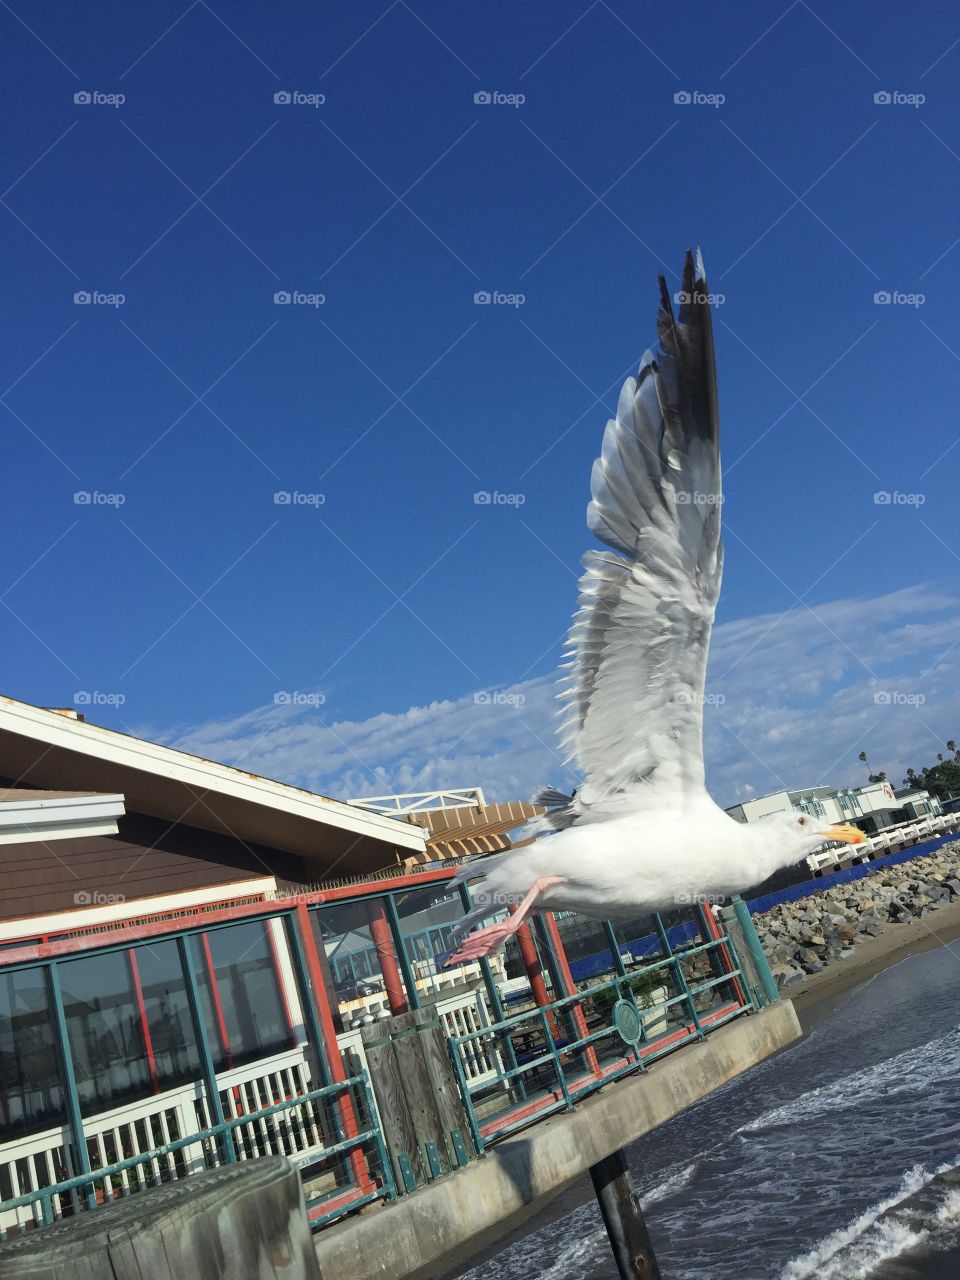 Sea gull photo bomber 